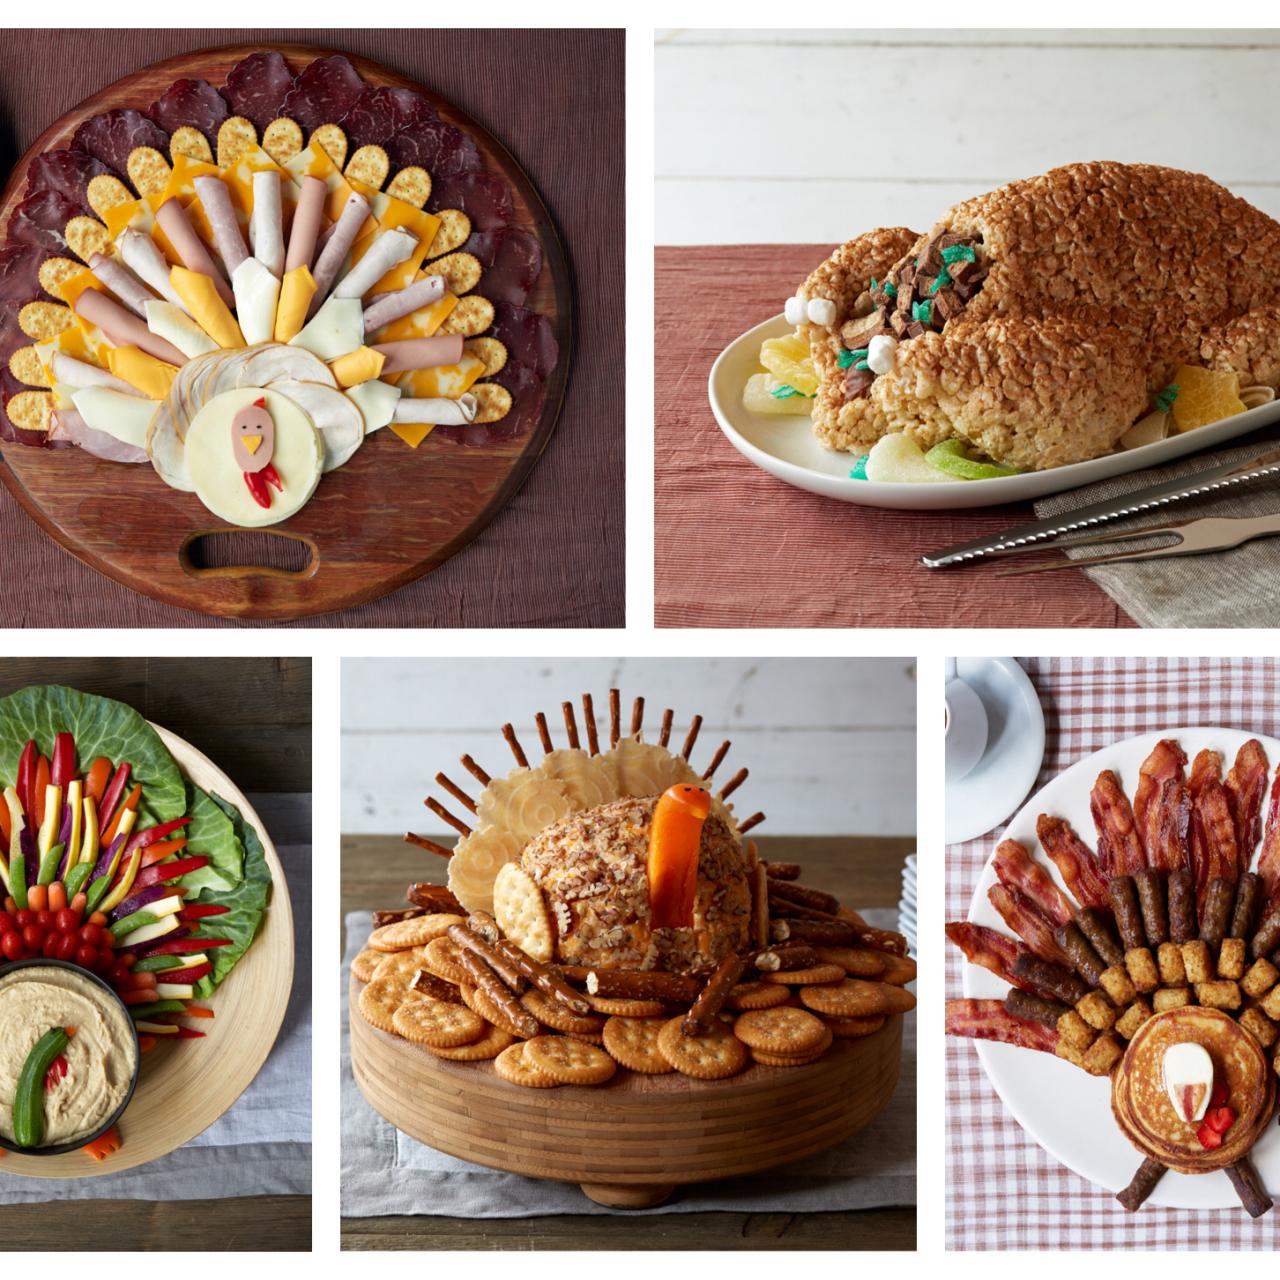 Over 50 festive alternatives to turkey